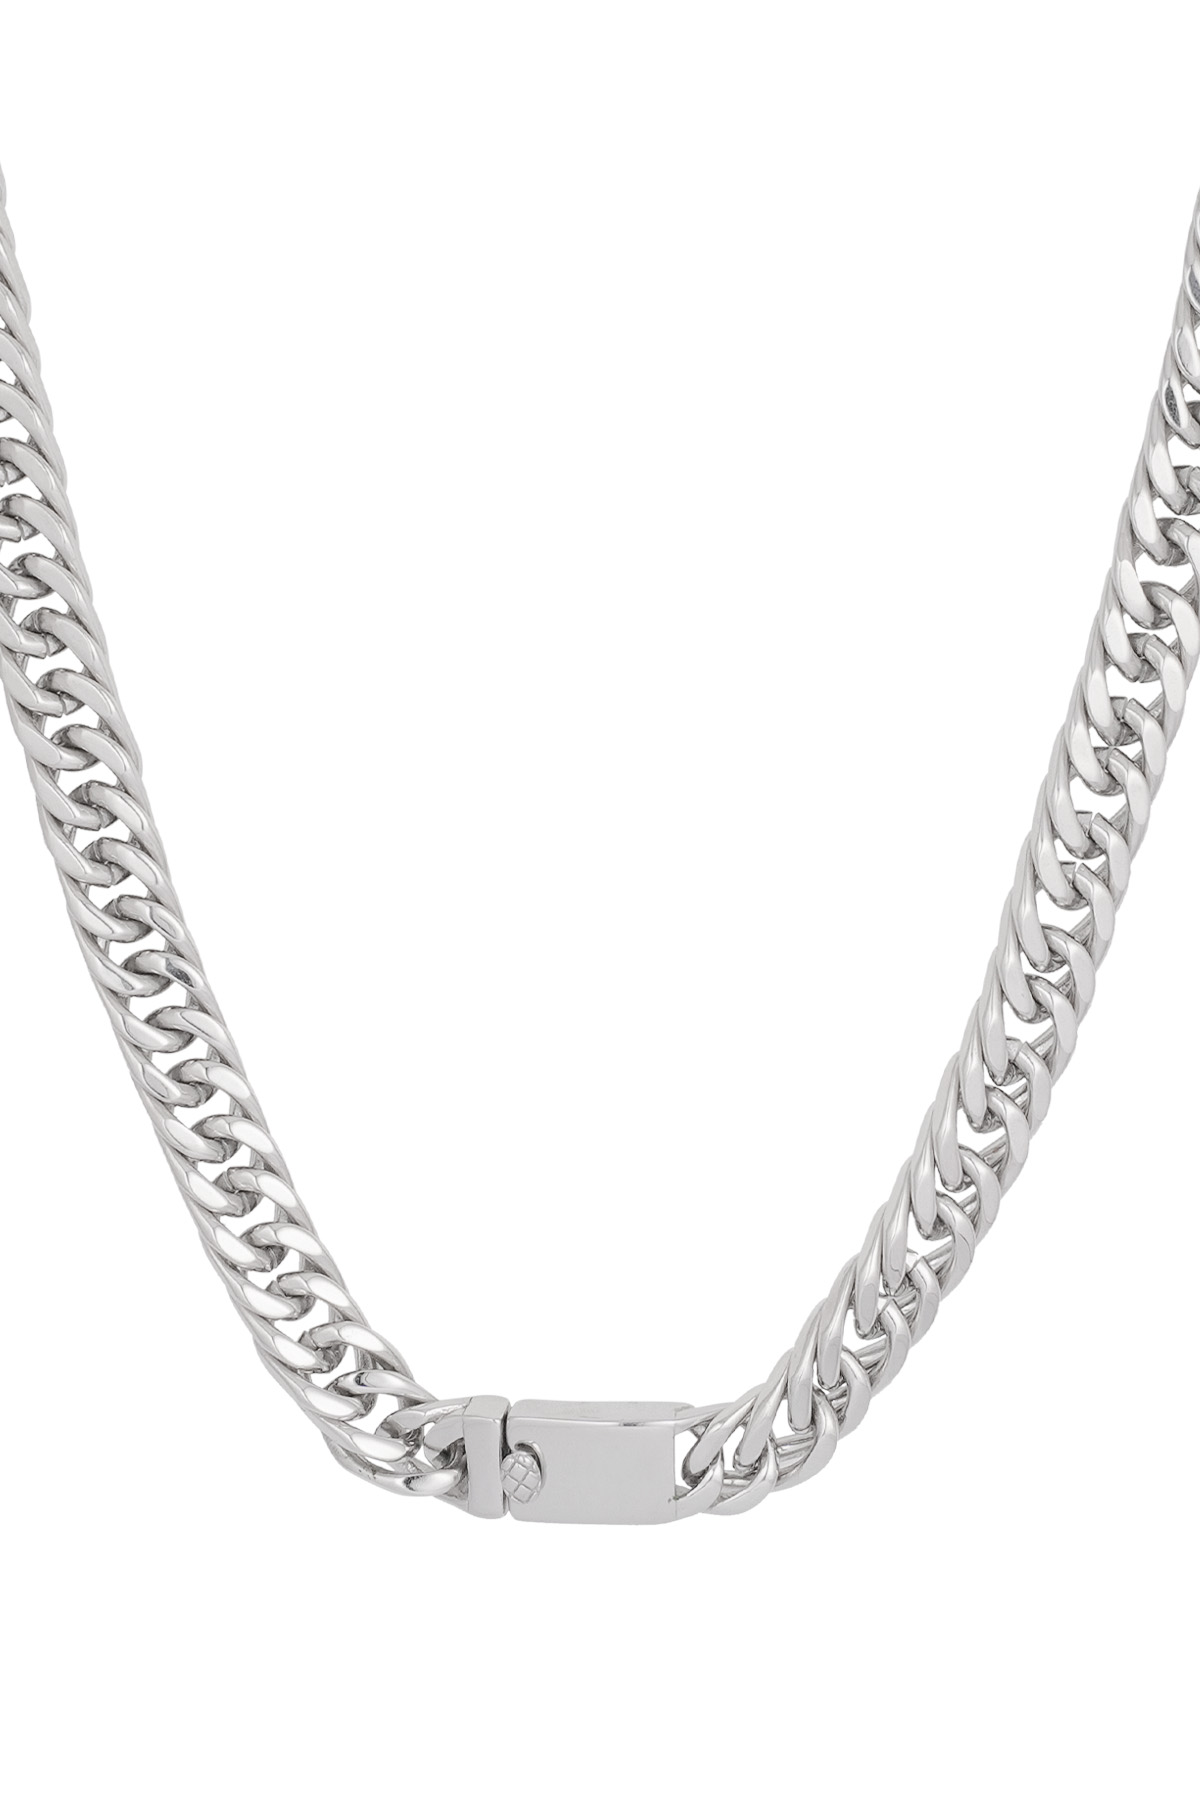 Men's chain necklace - silver h5 Picture2